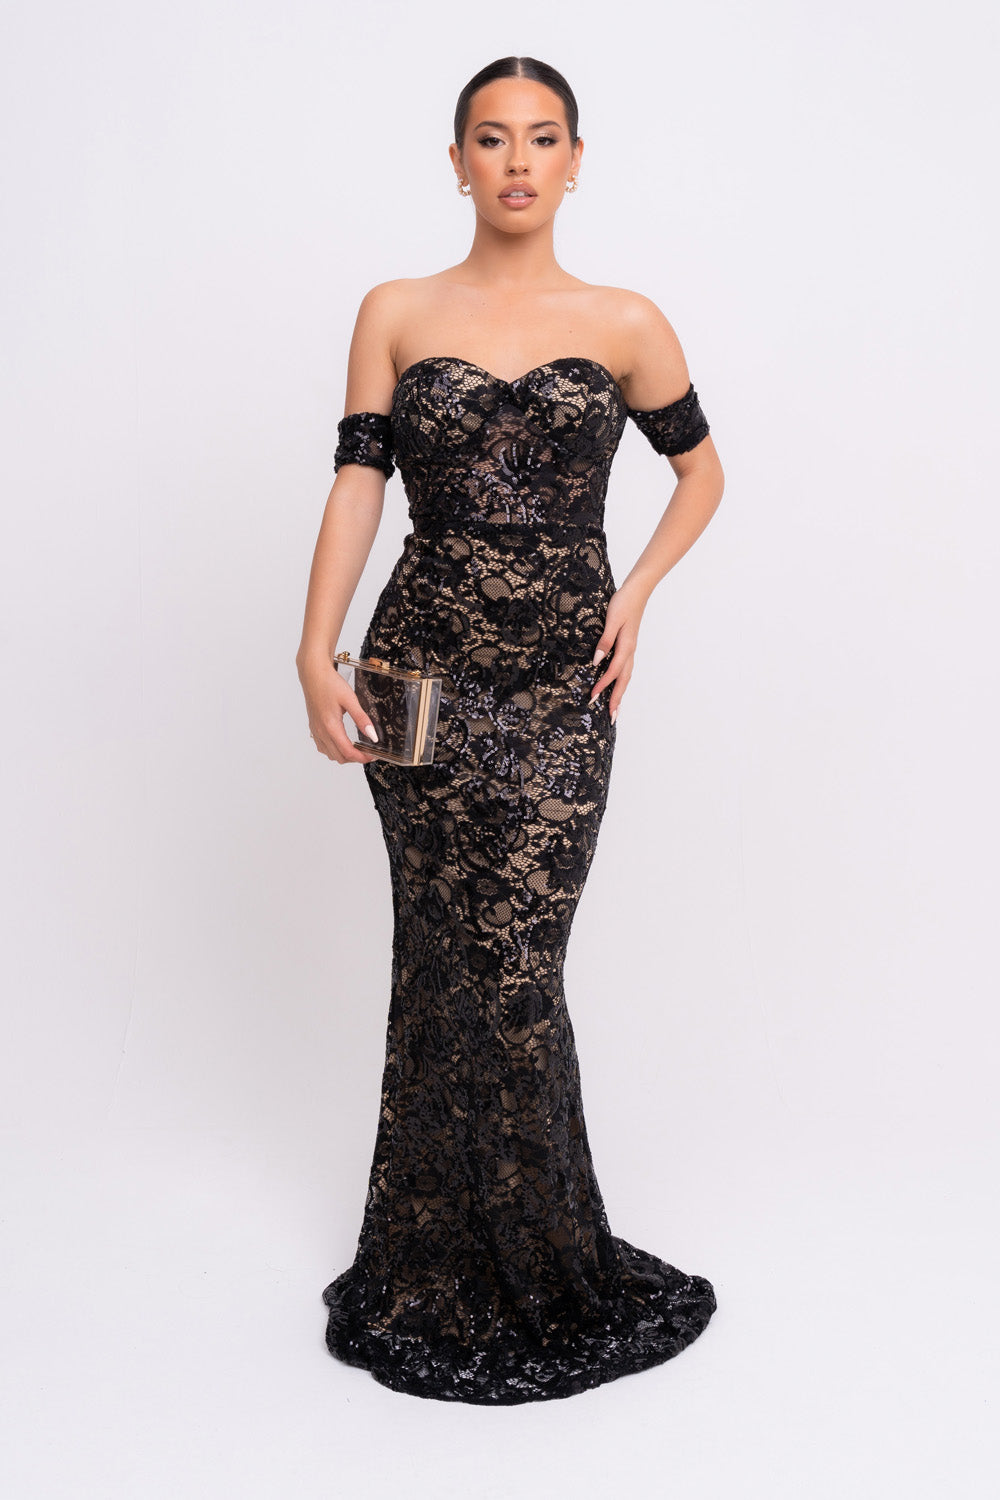 Daydreamer Black Floral Lace Sequin Embellished Off The Shoulder Bardot Cuff Maxi Dress